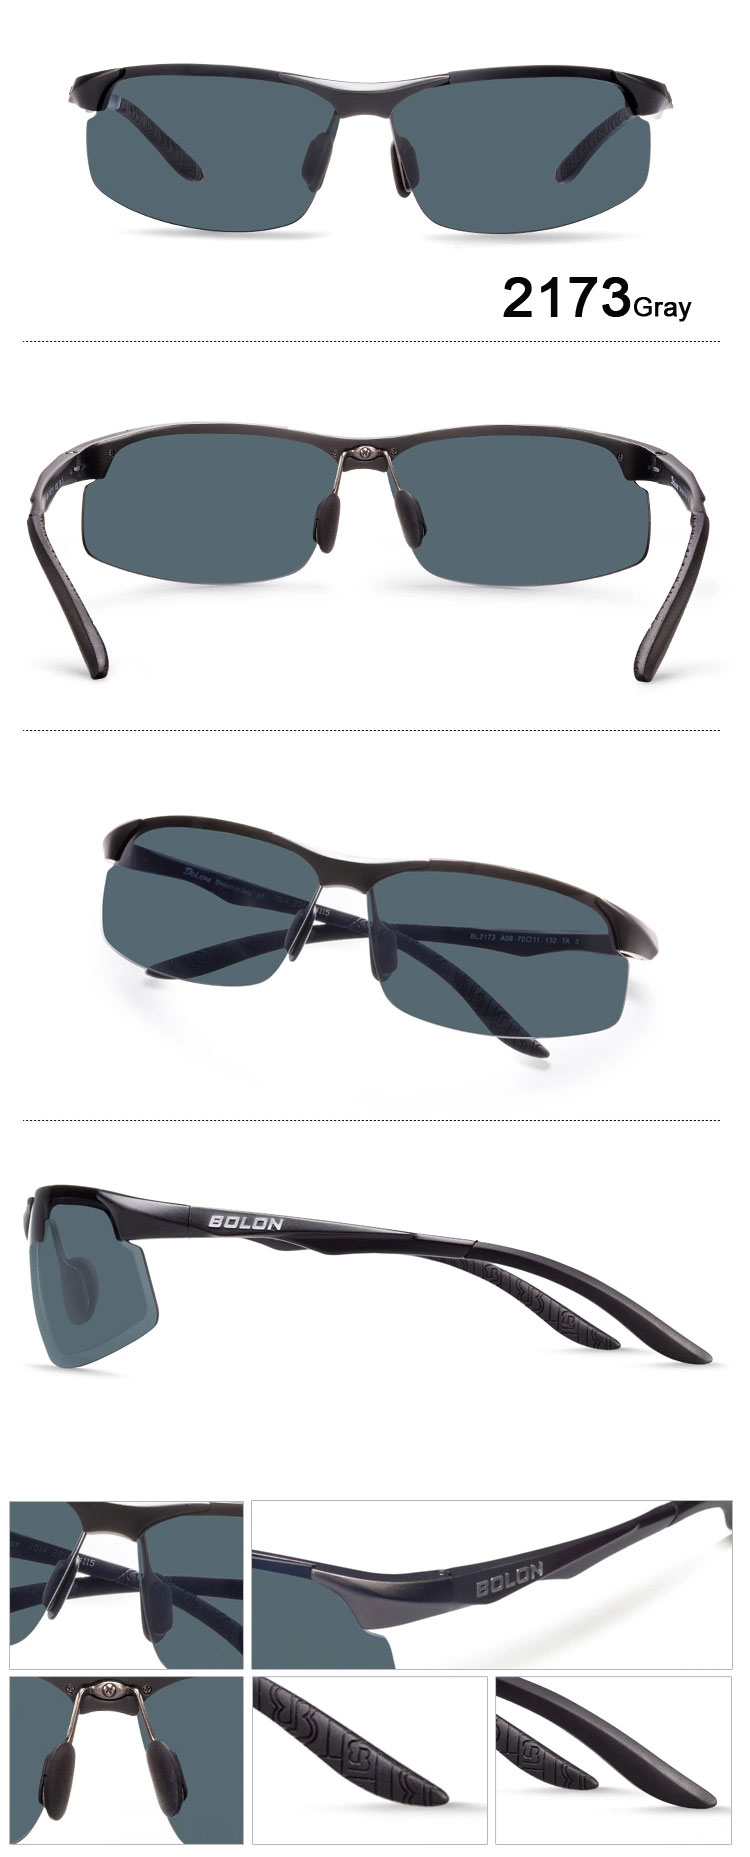 Half Frame Sunglasses Aluminum magnesium Alloy Frame Polarized Sunglasses 2173 gray